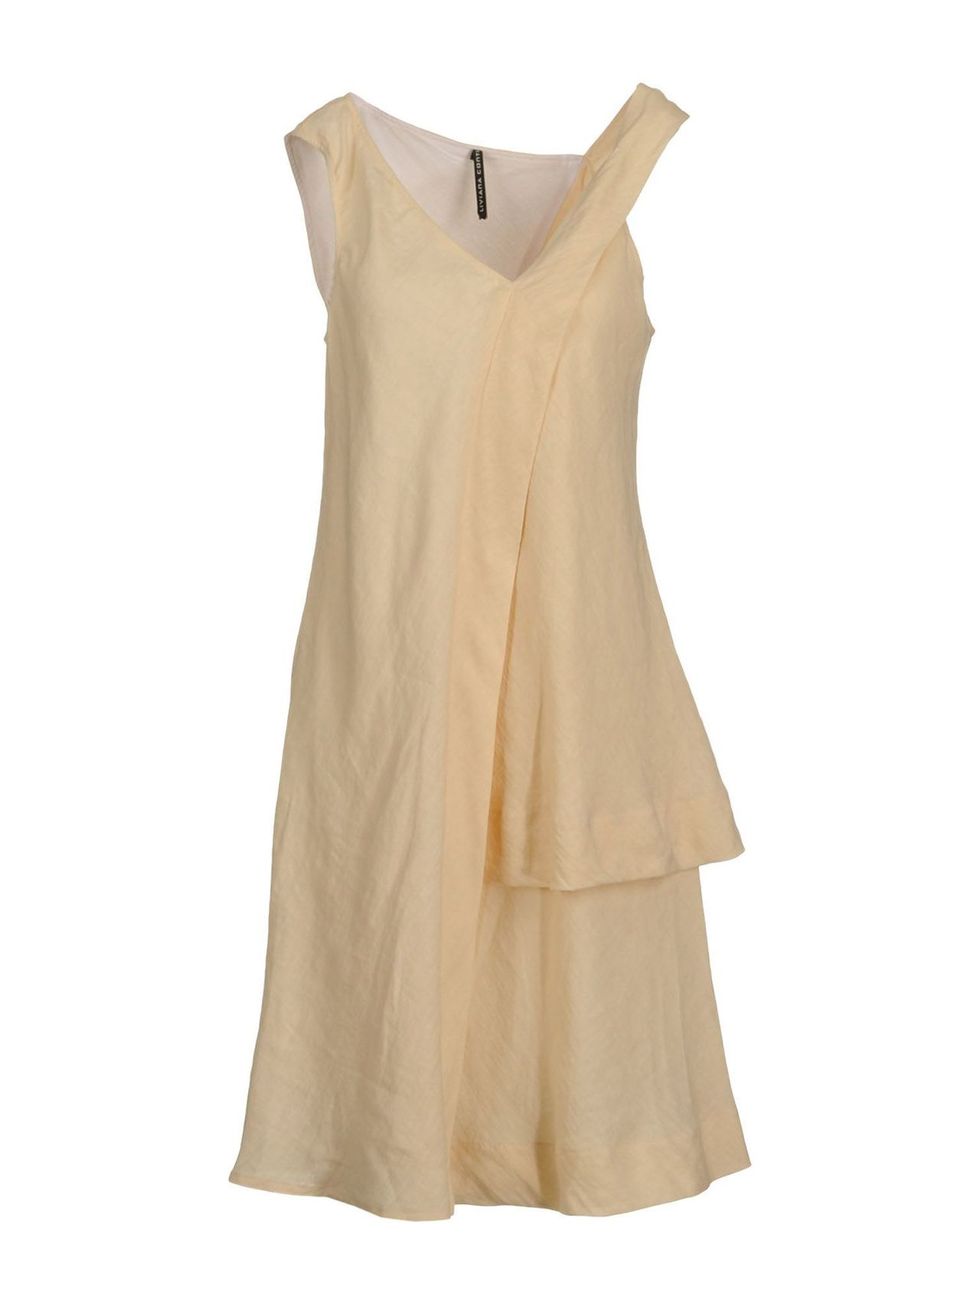 Brown, Textile, Dress, One-piece garment, Sleeveless shirt, Khaki, Day dress, Tan, Beige, Ivory, 